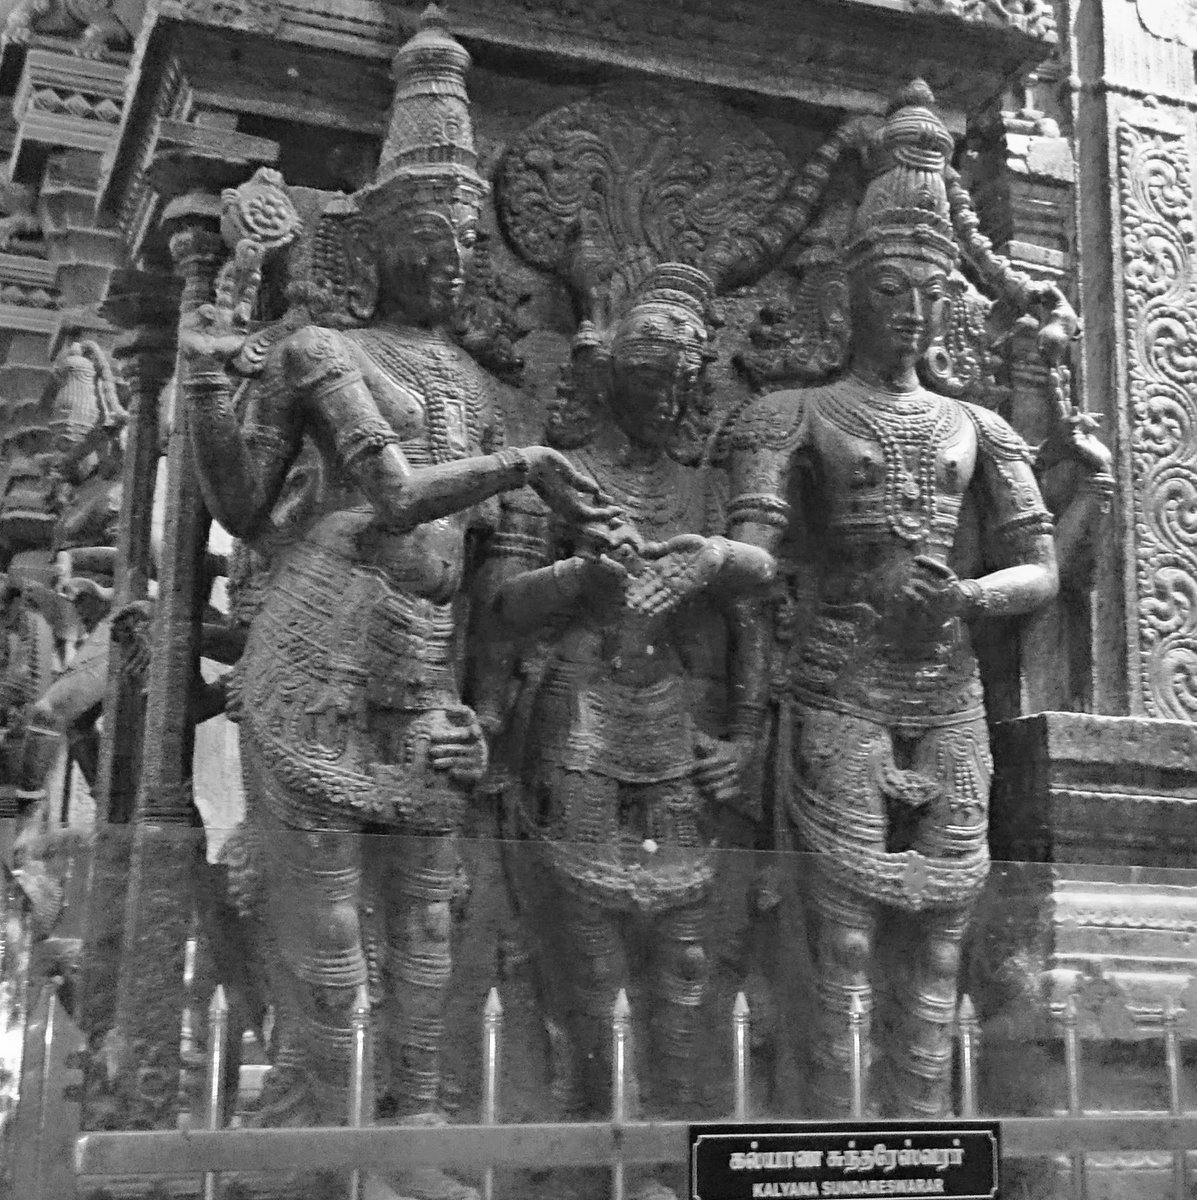 Some Kalyanasundaramurthi images show Vishnu, giving Parvati away by pouring water from a pot on their joined hands. Pic 3. Meenakshi temple, Madurai, Pic 4. Kerala Folklore Museum, Cochin. Pic 5. Chola bronze from Thiruvengadu, Thanjavur Museum  #AksharArt  #ArtByTheLetter